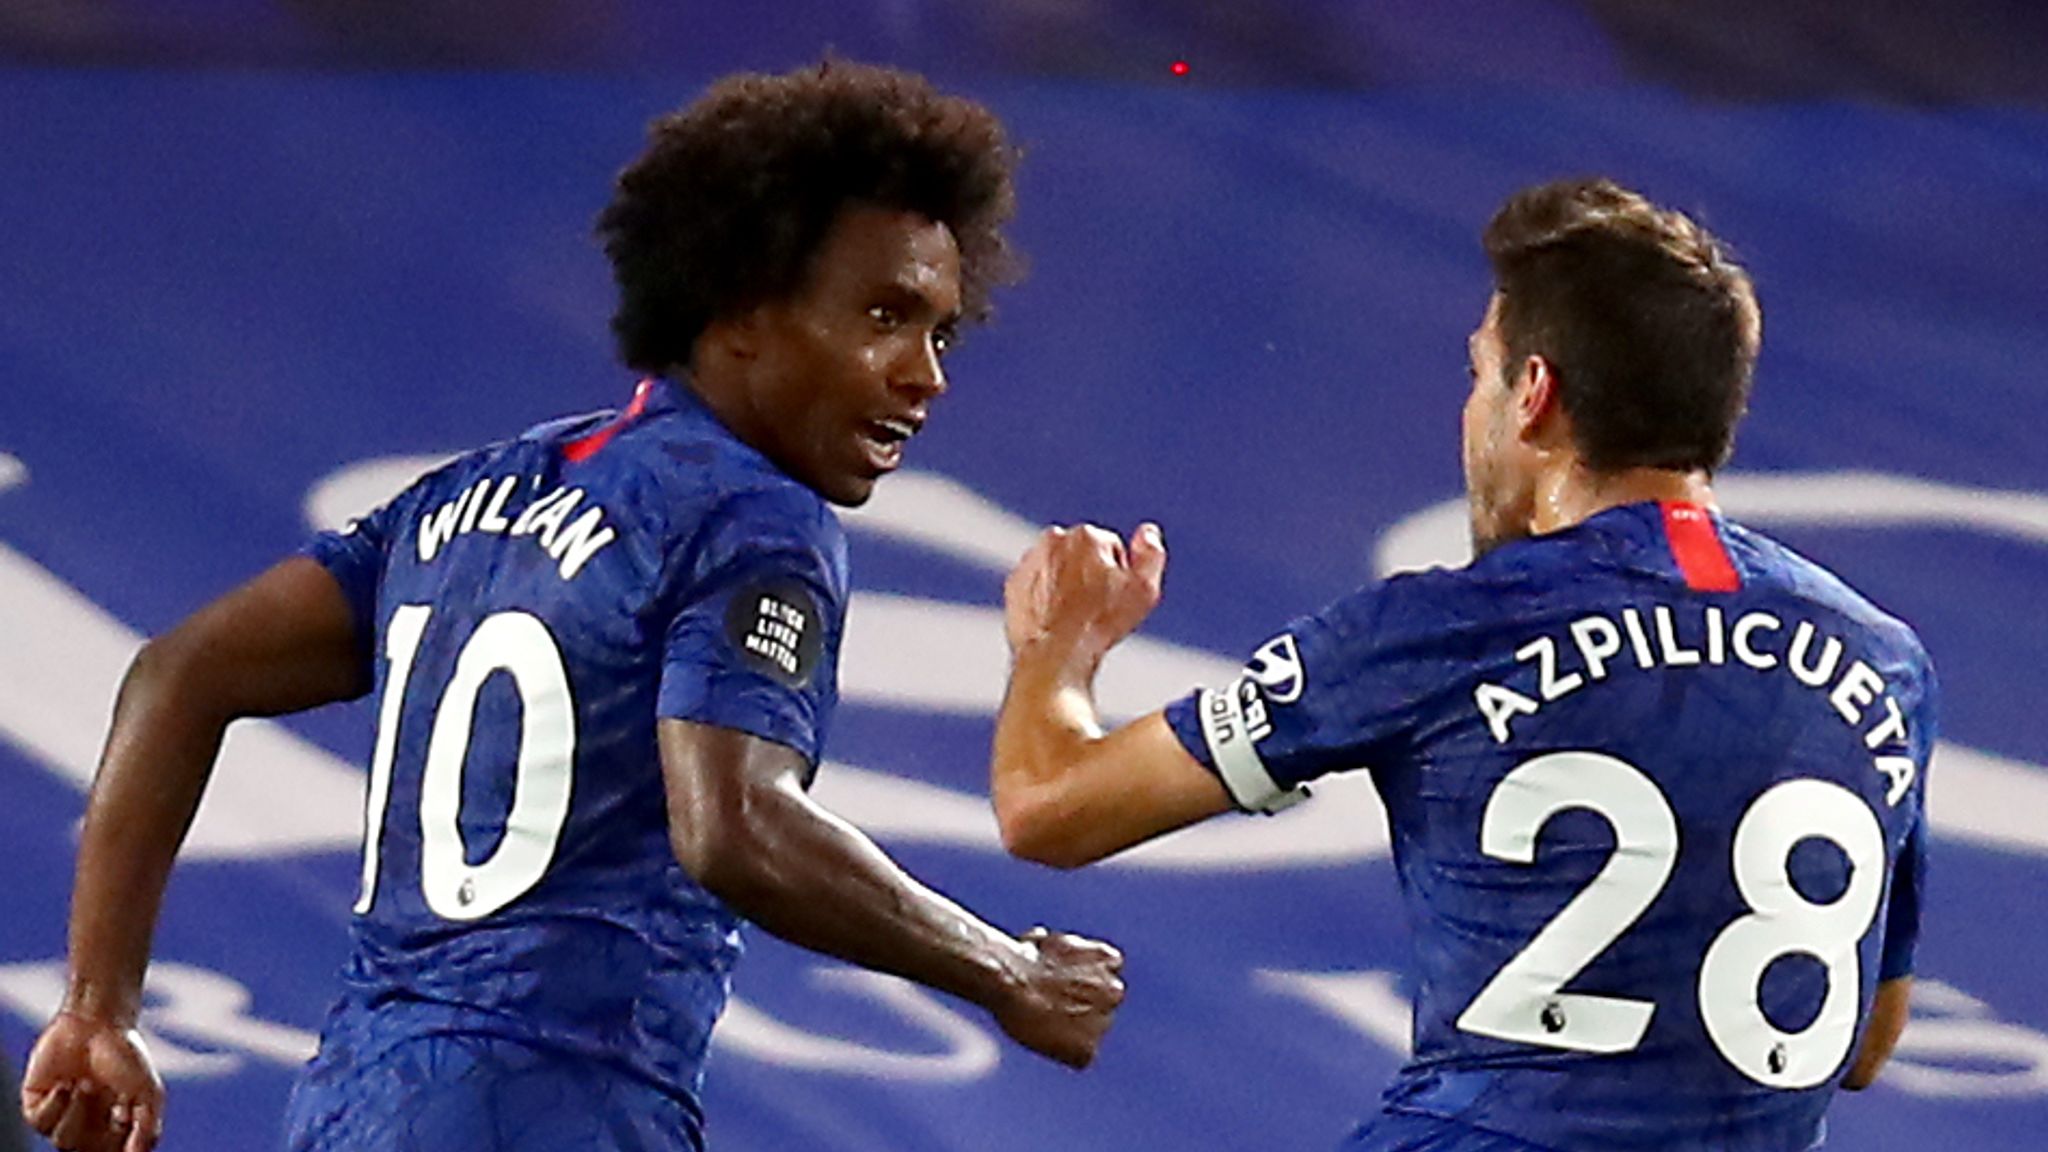 Chelsea 2 x 1 Manchester City: Willian decide, Blues vencem e Liverpool é  campeão da Premier League!